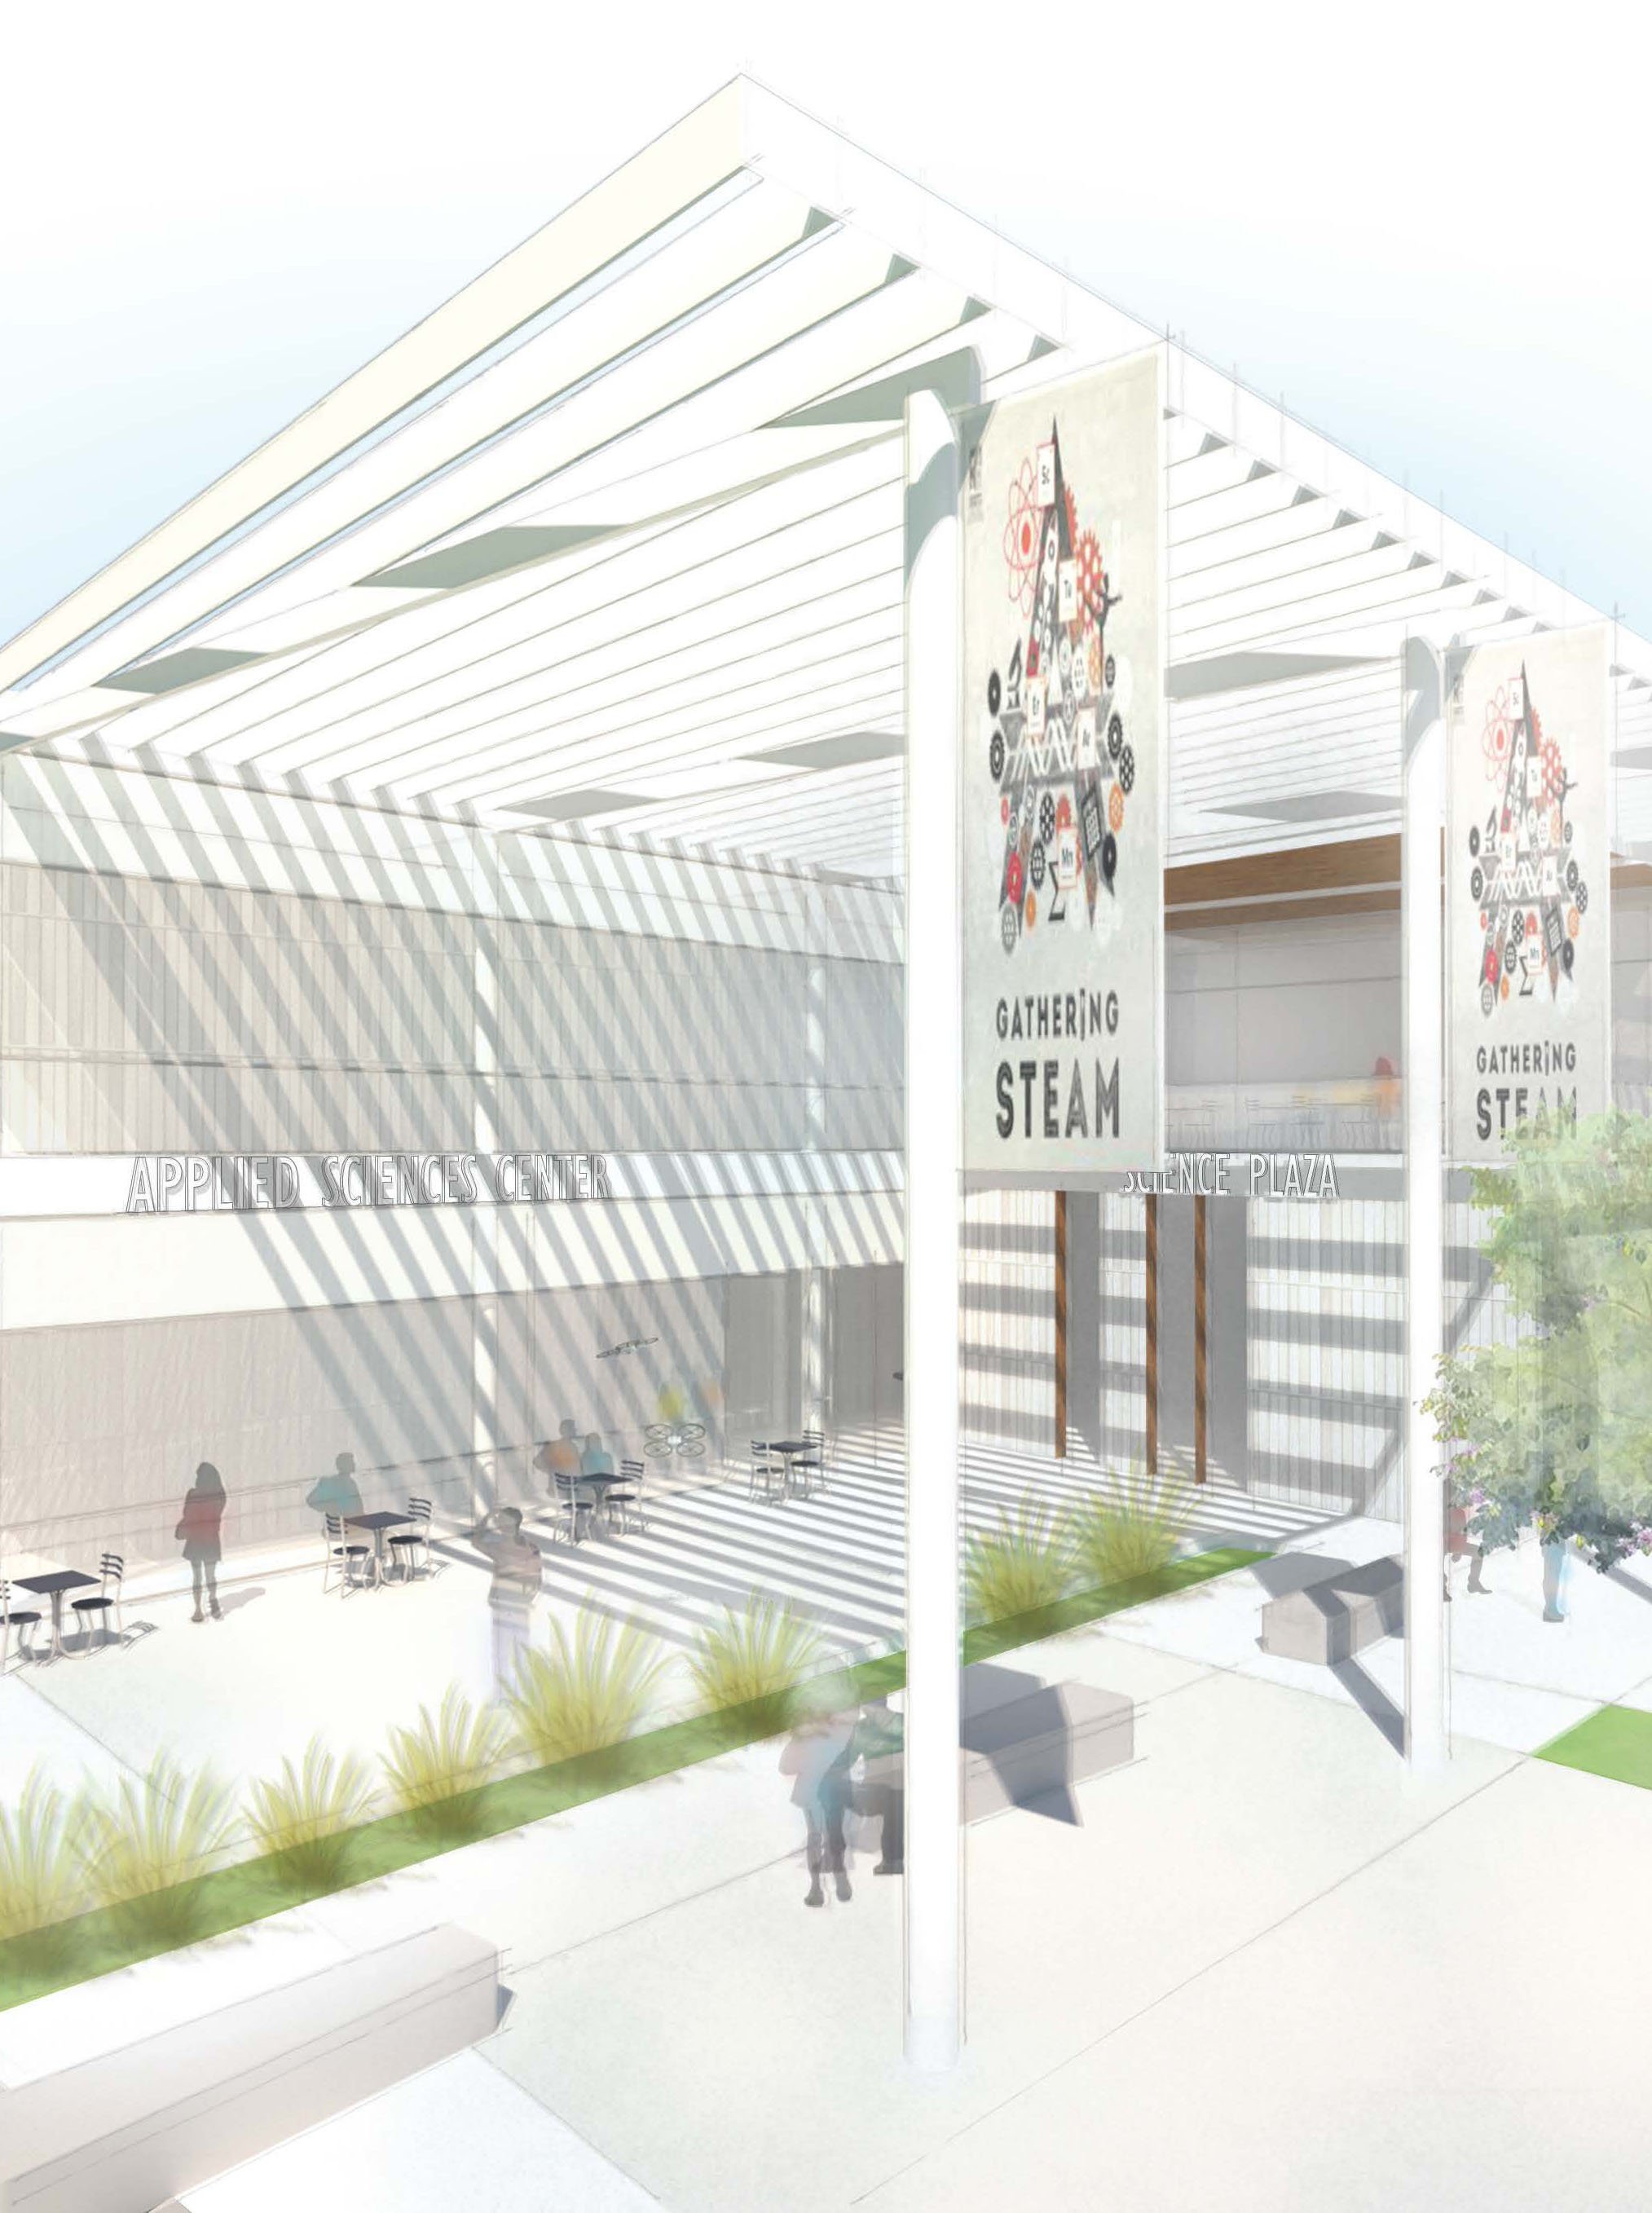 Applied Sciences Center rendering